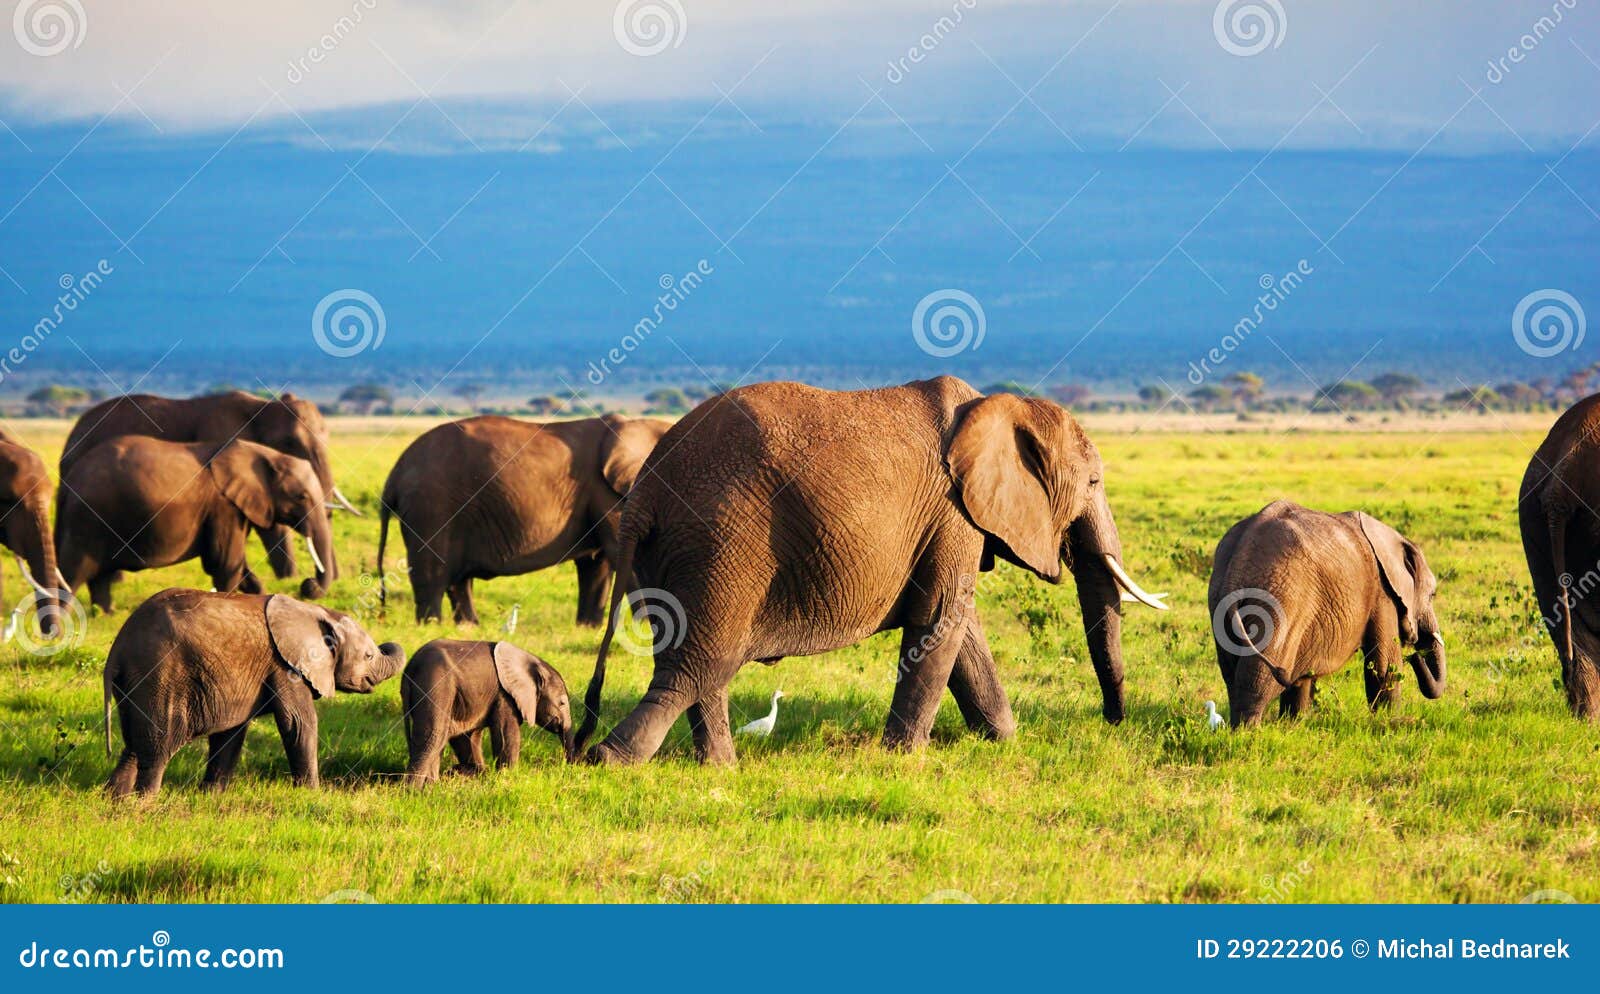 elephants family on savanna. safari in amboseli, kenya, africa